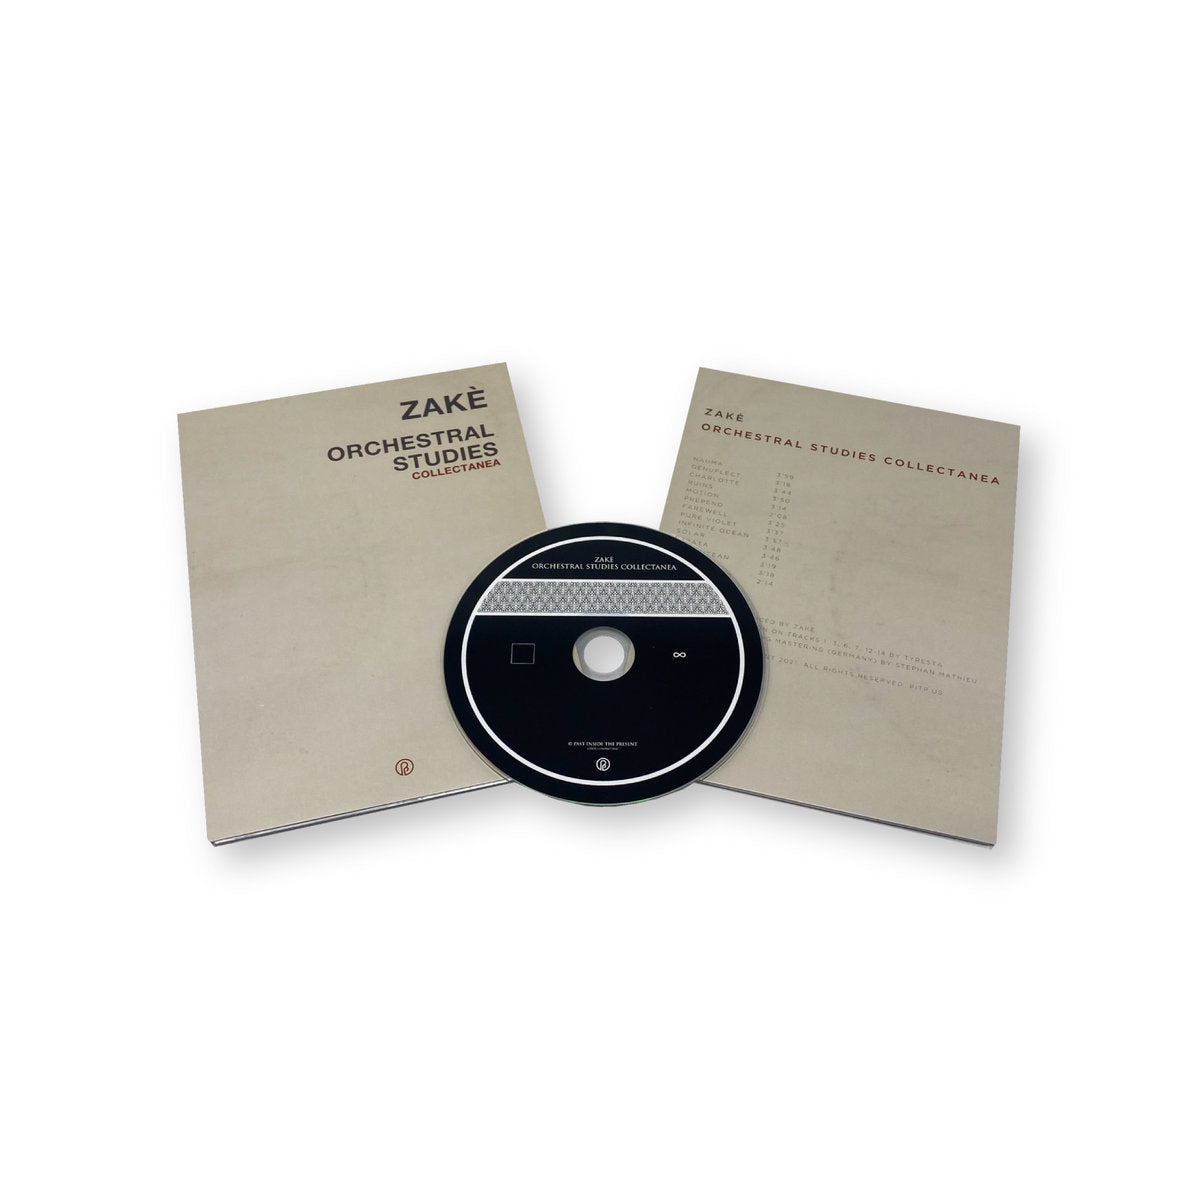 zakè 'Orchestral Studies Collectanea' [CD]